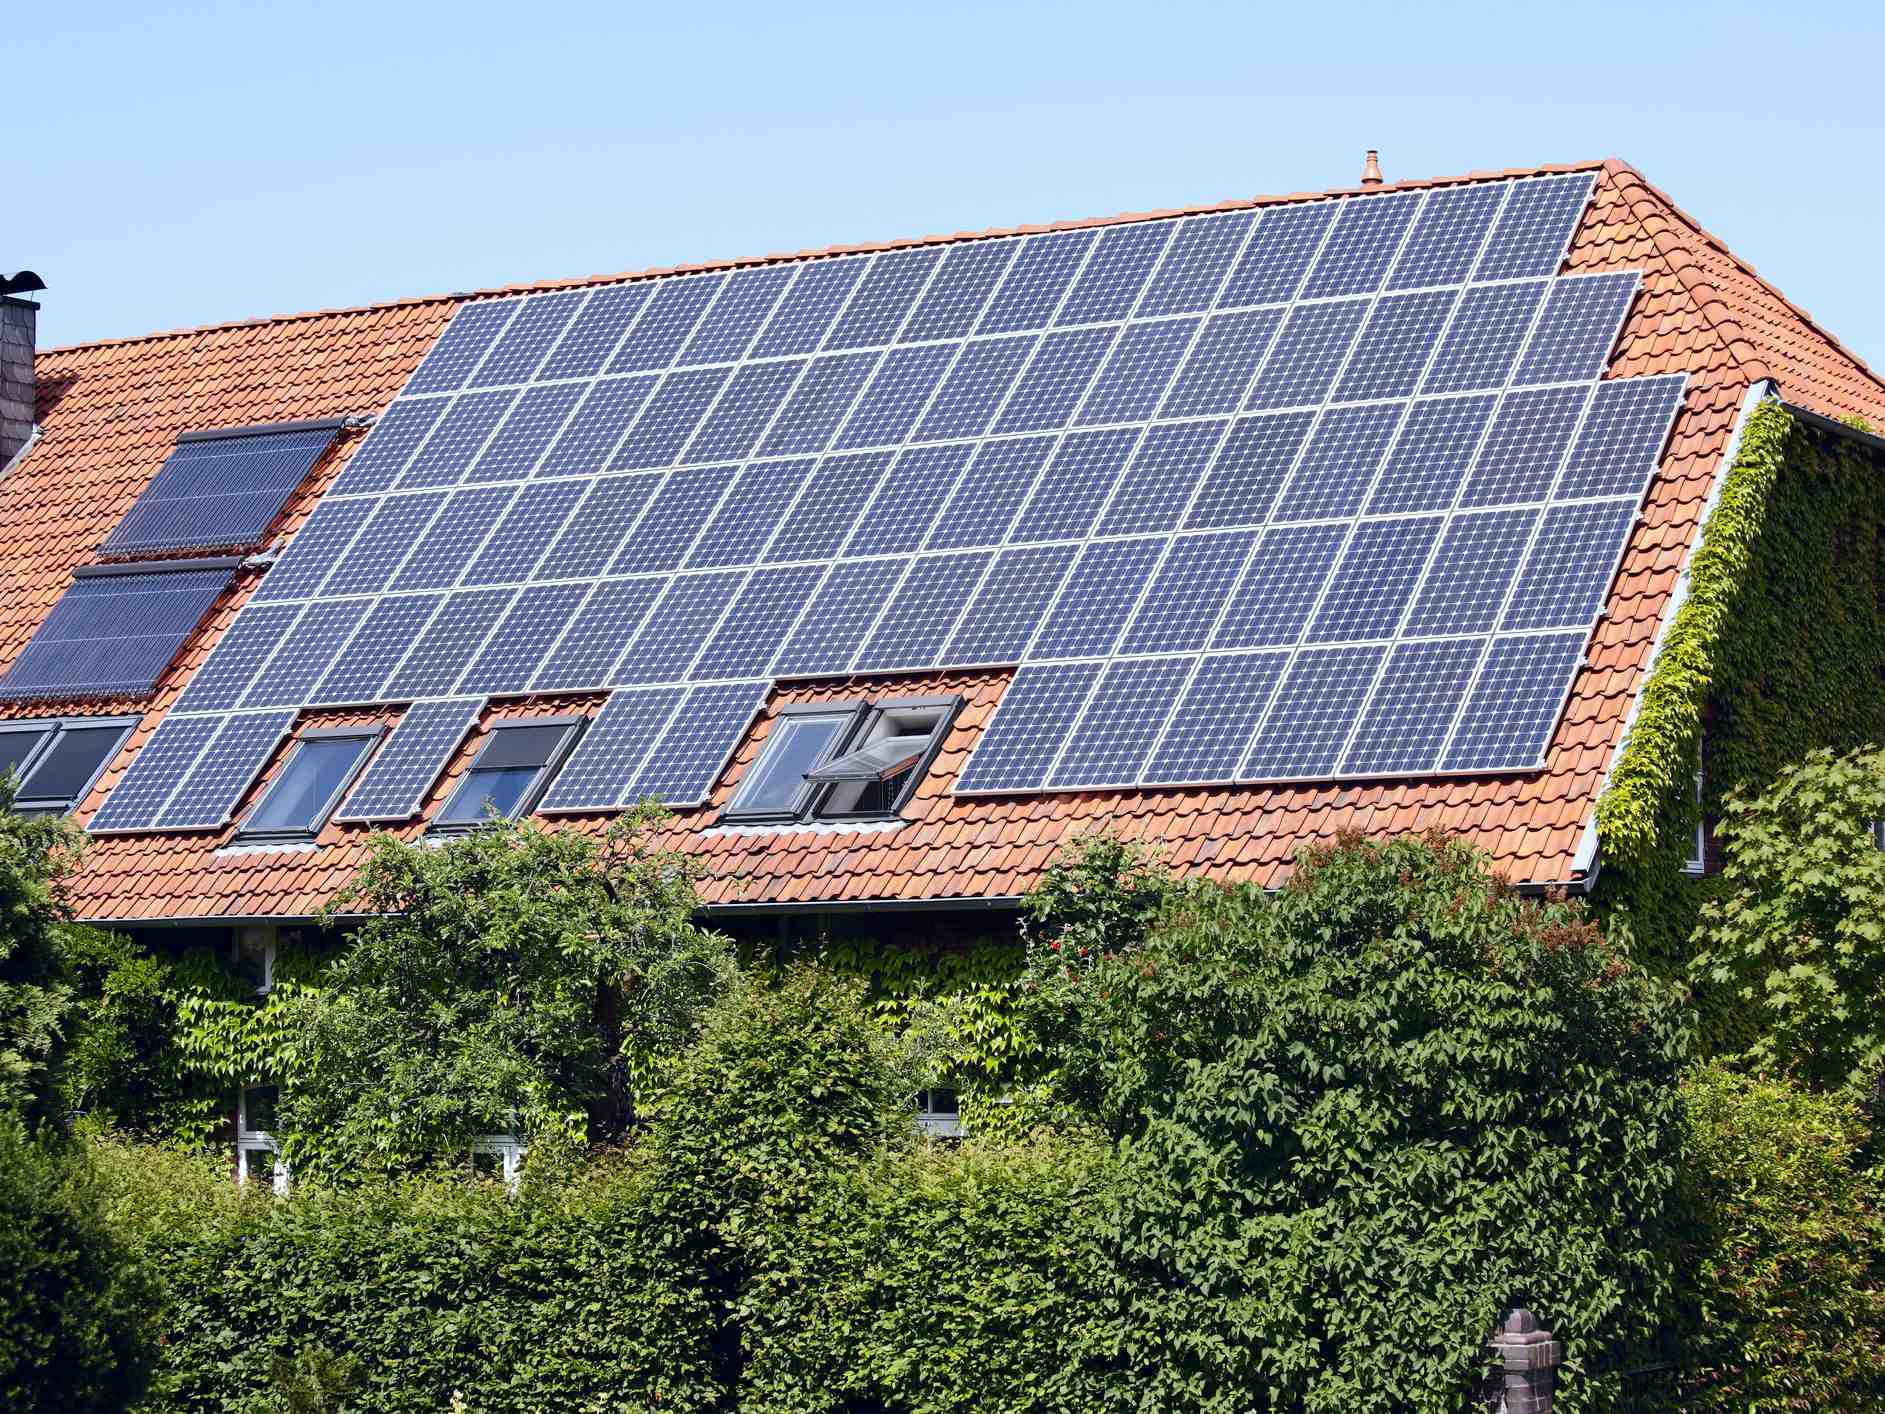 Do solar panels affect the environment?